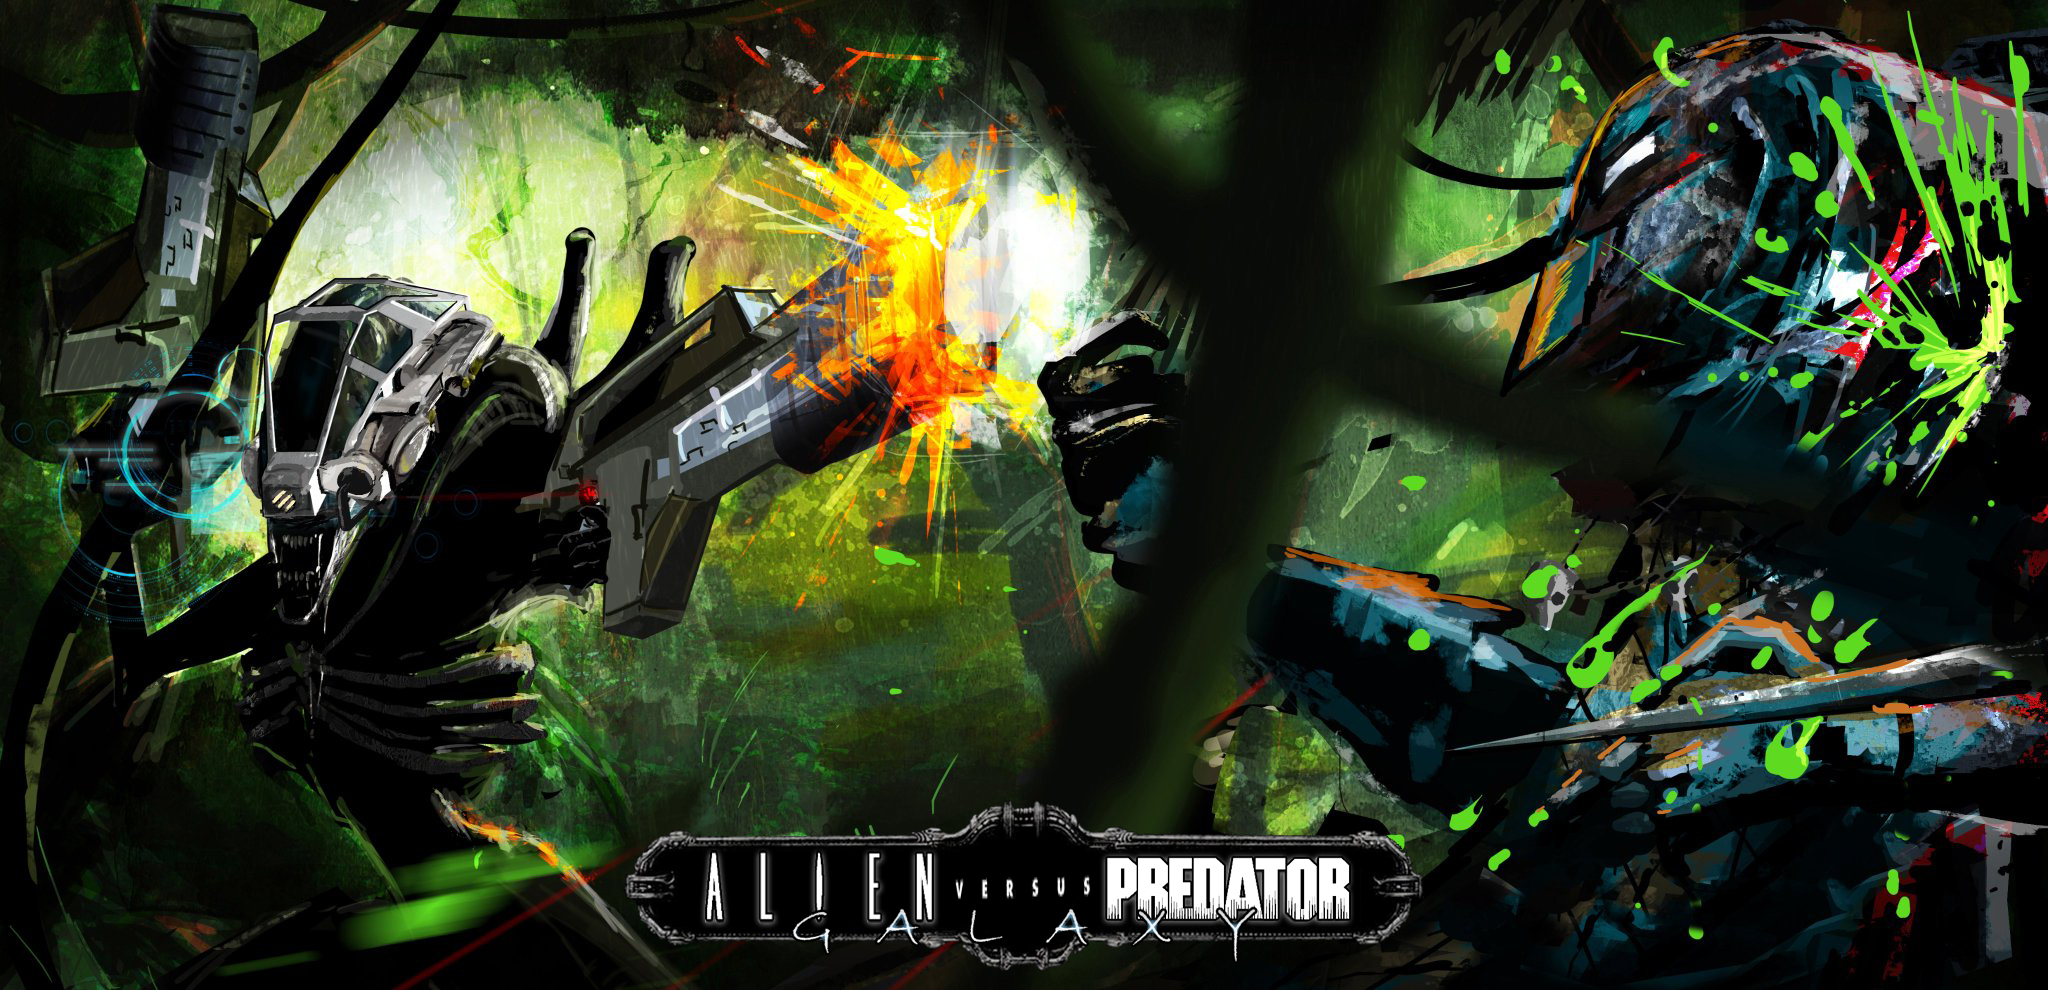 Aliens vs. Predator: Hunter's Planet by David Bischoff